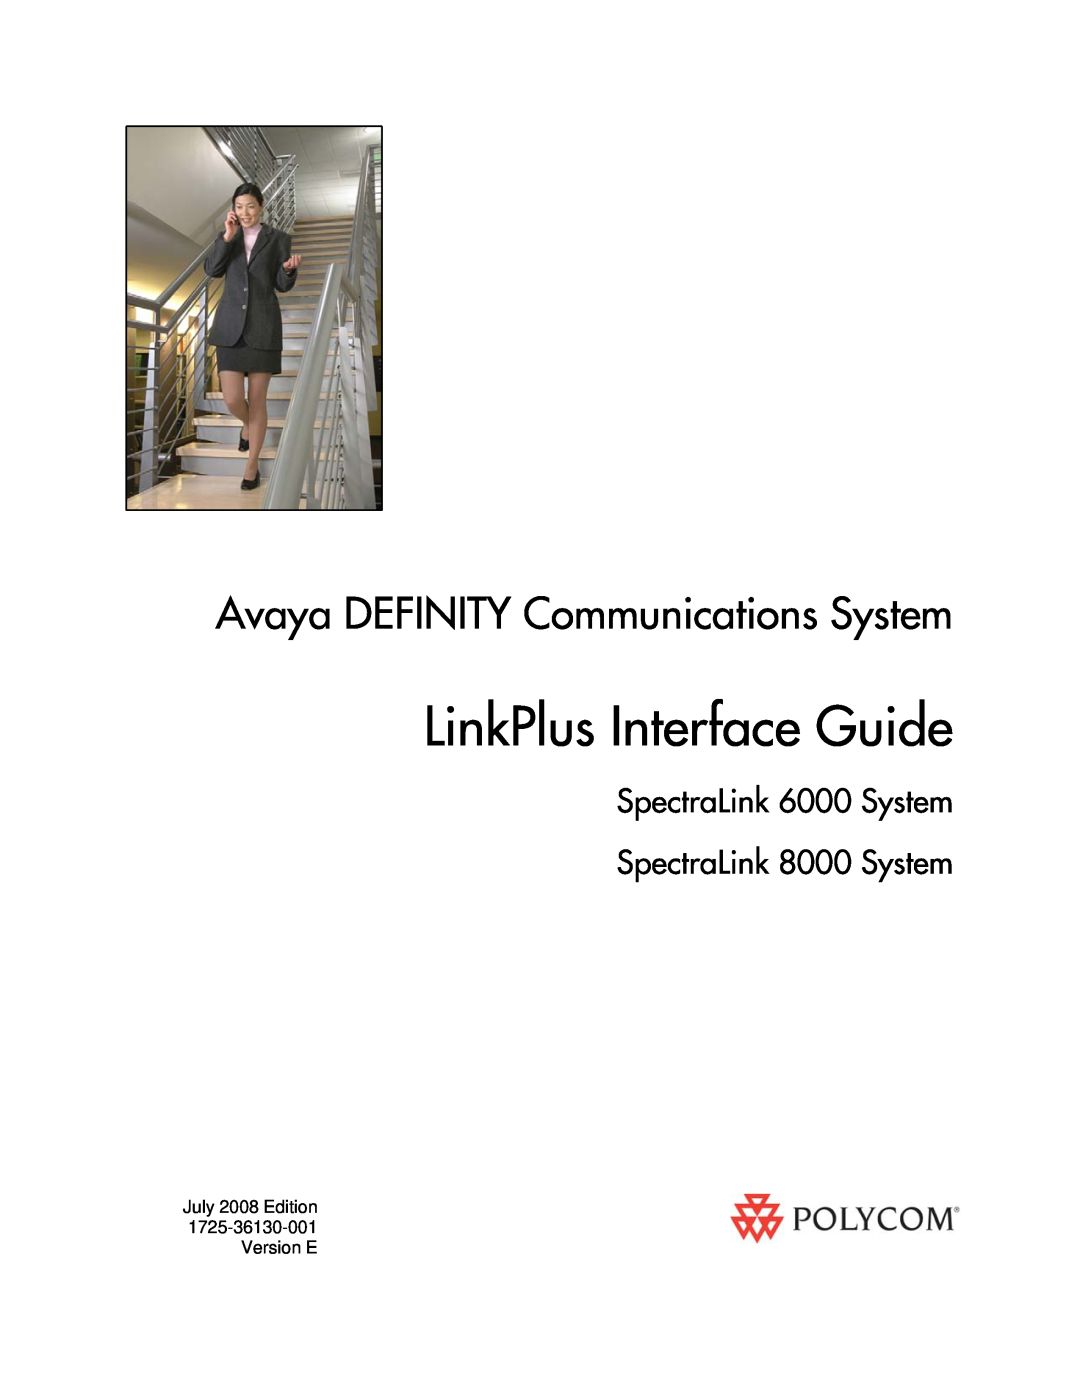 Polycom 1725-361300-001, SPECTRALINK 8000 manual LinkPlus Interface Guide, Avaya DEFINITY Communications System 